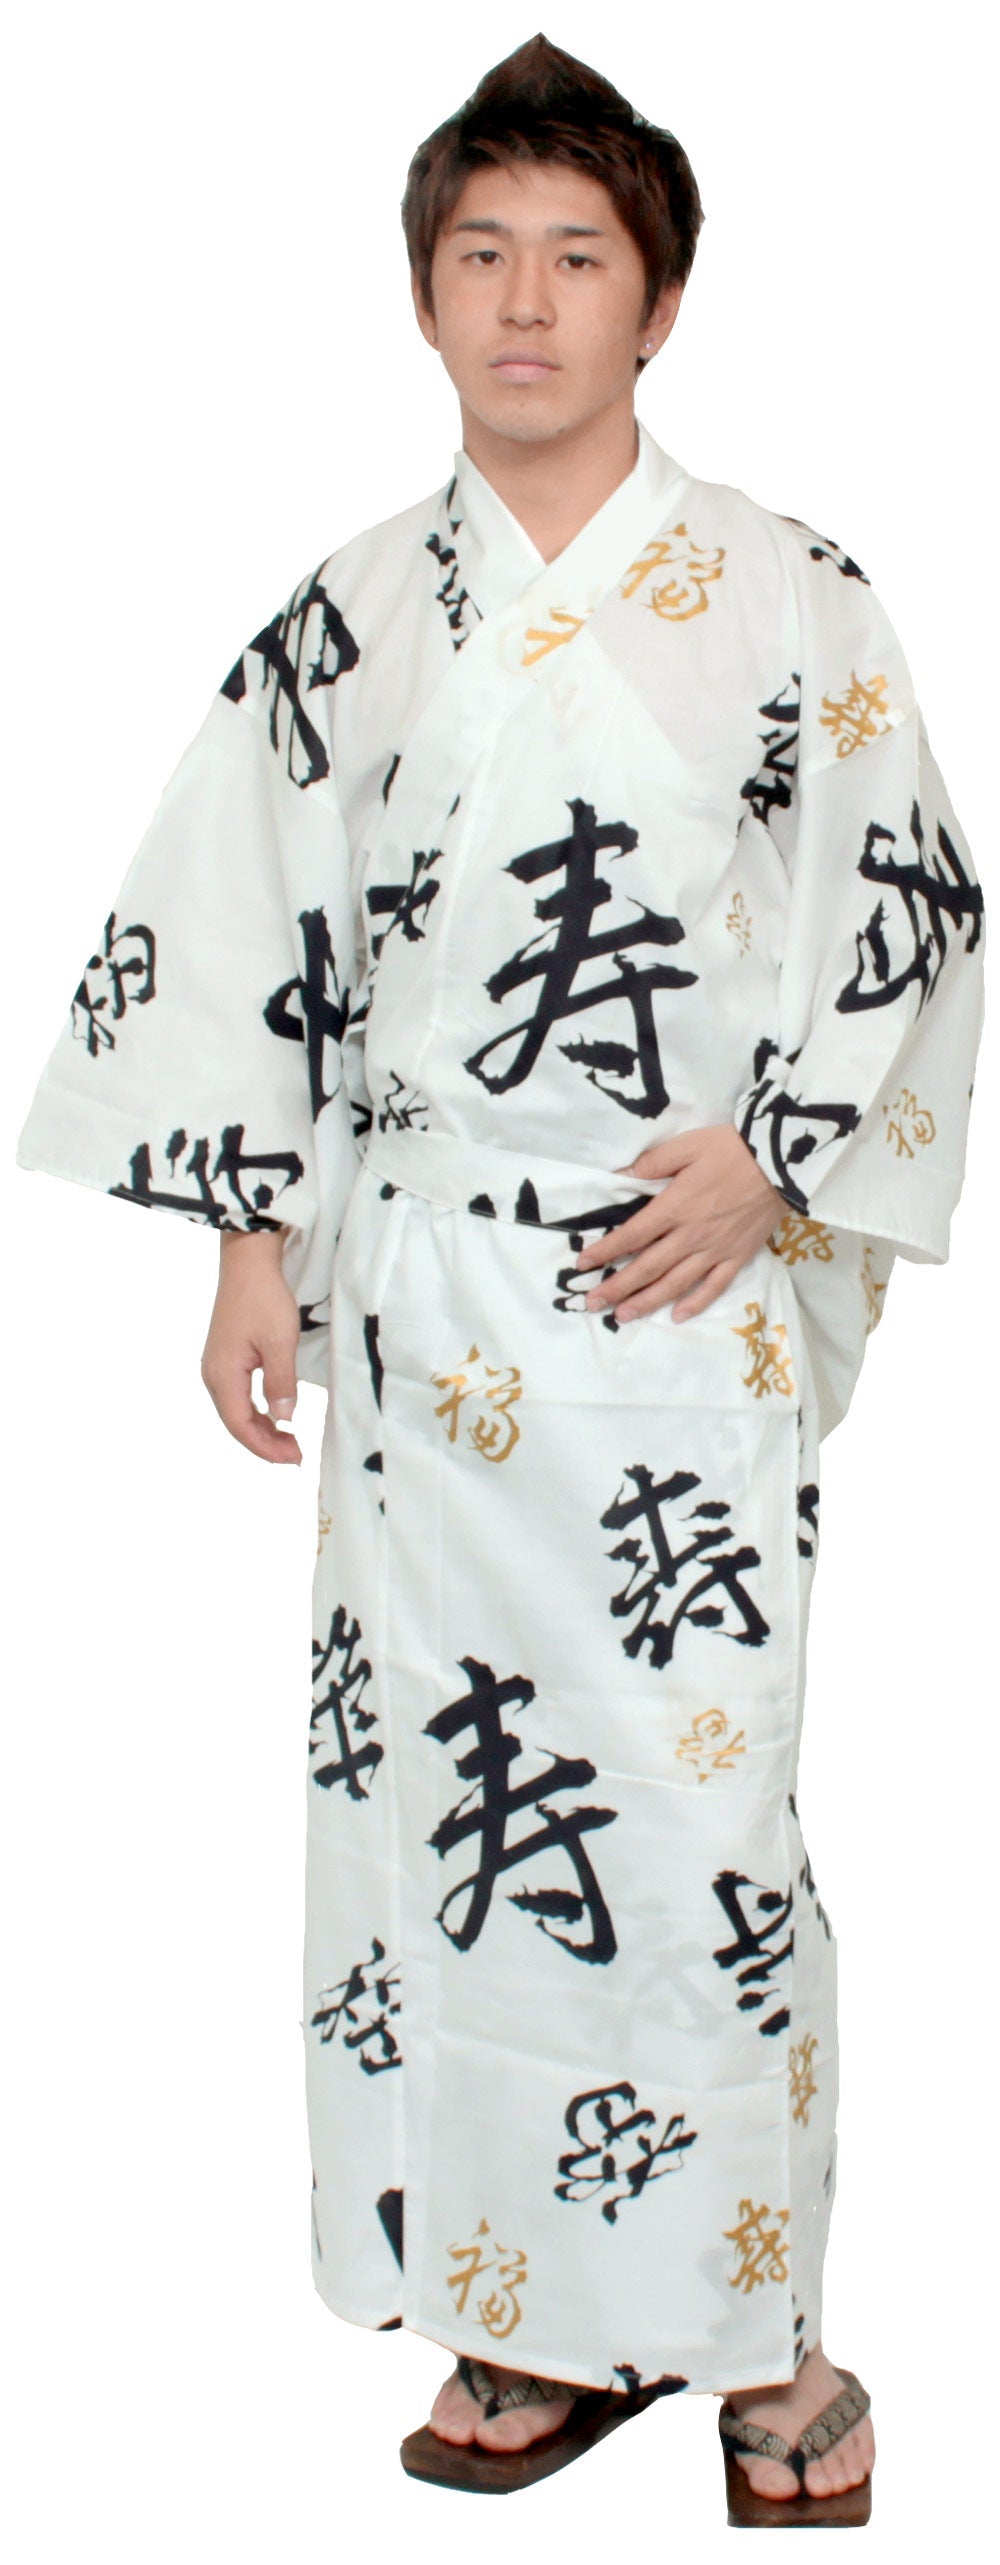 Men's Easy Yukata / Kimono Robe : Japanese Traditional Clothes - Robe Happy Longevity White